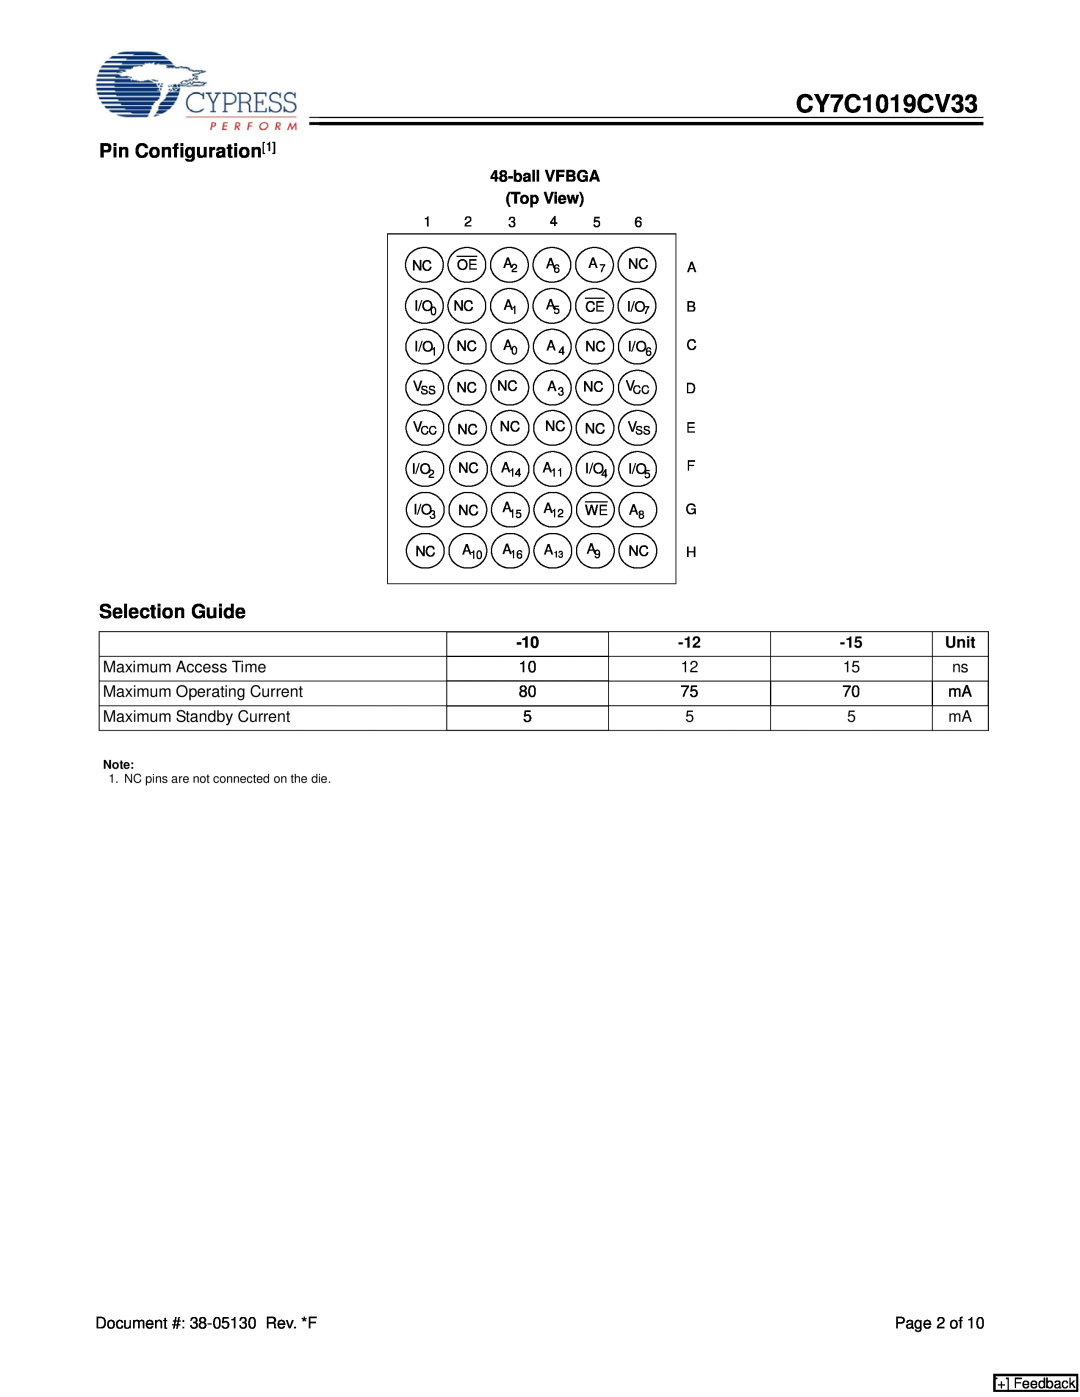 Cypress CY7C1019CV33 manual Pin Configuration1 Selection Guide, ball VFBGA Top View, Unit, + Feedback 